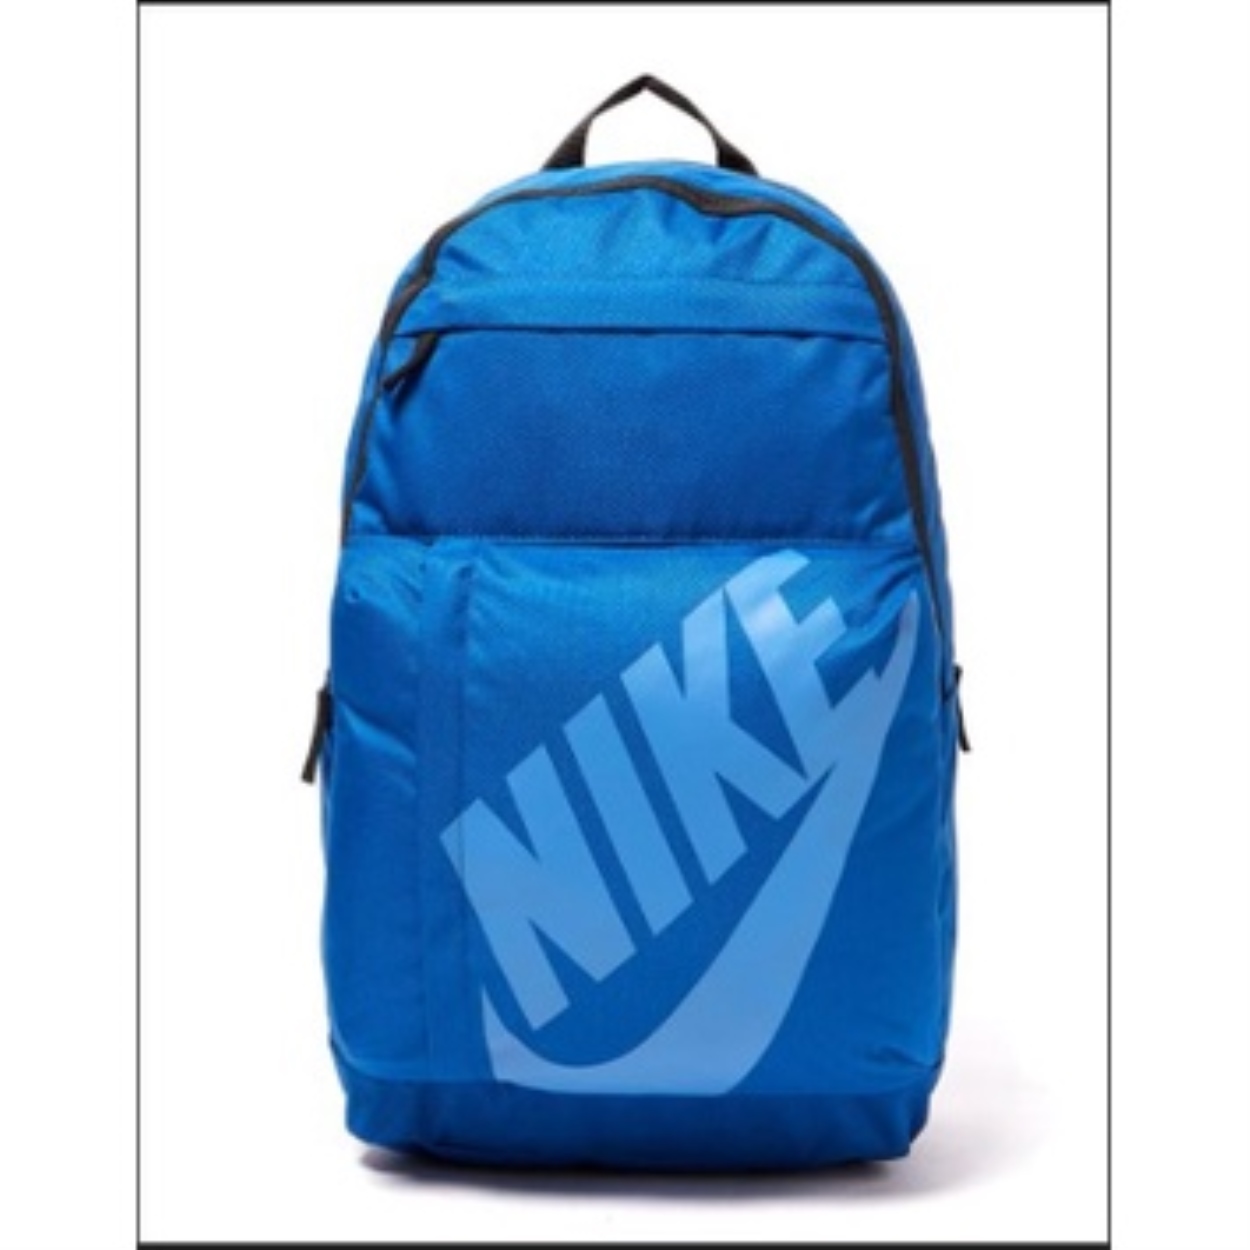 Adidas Backpacks - Shop Latest Adidas Backpacks Online in India | Myntra